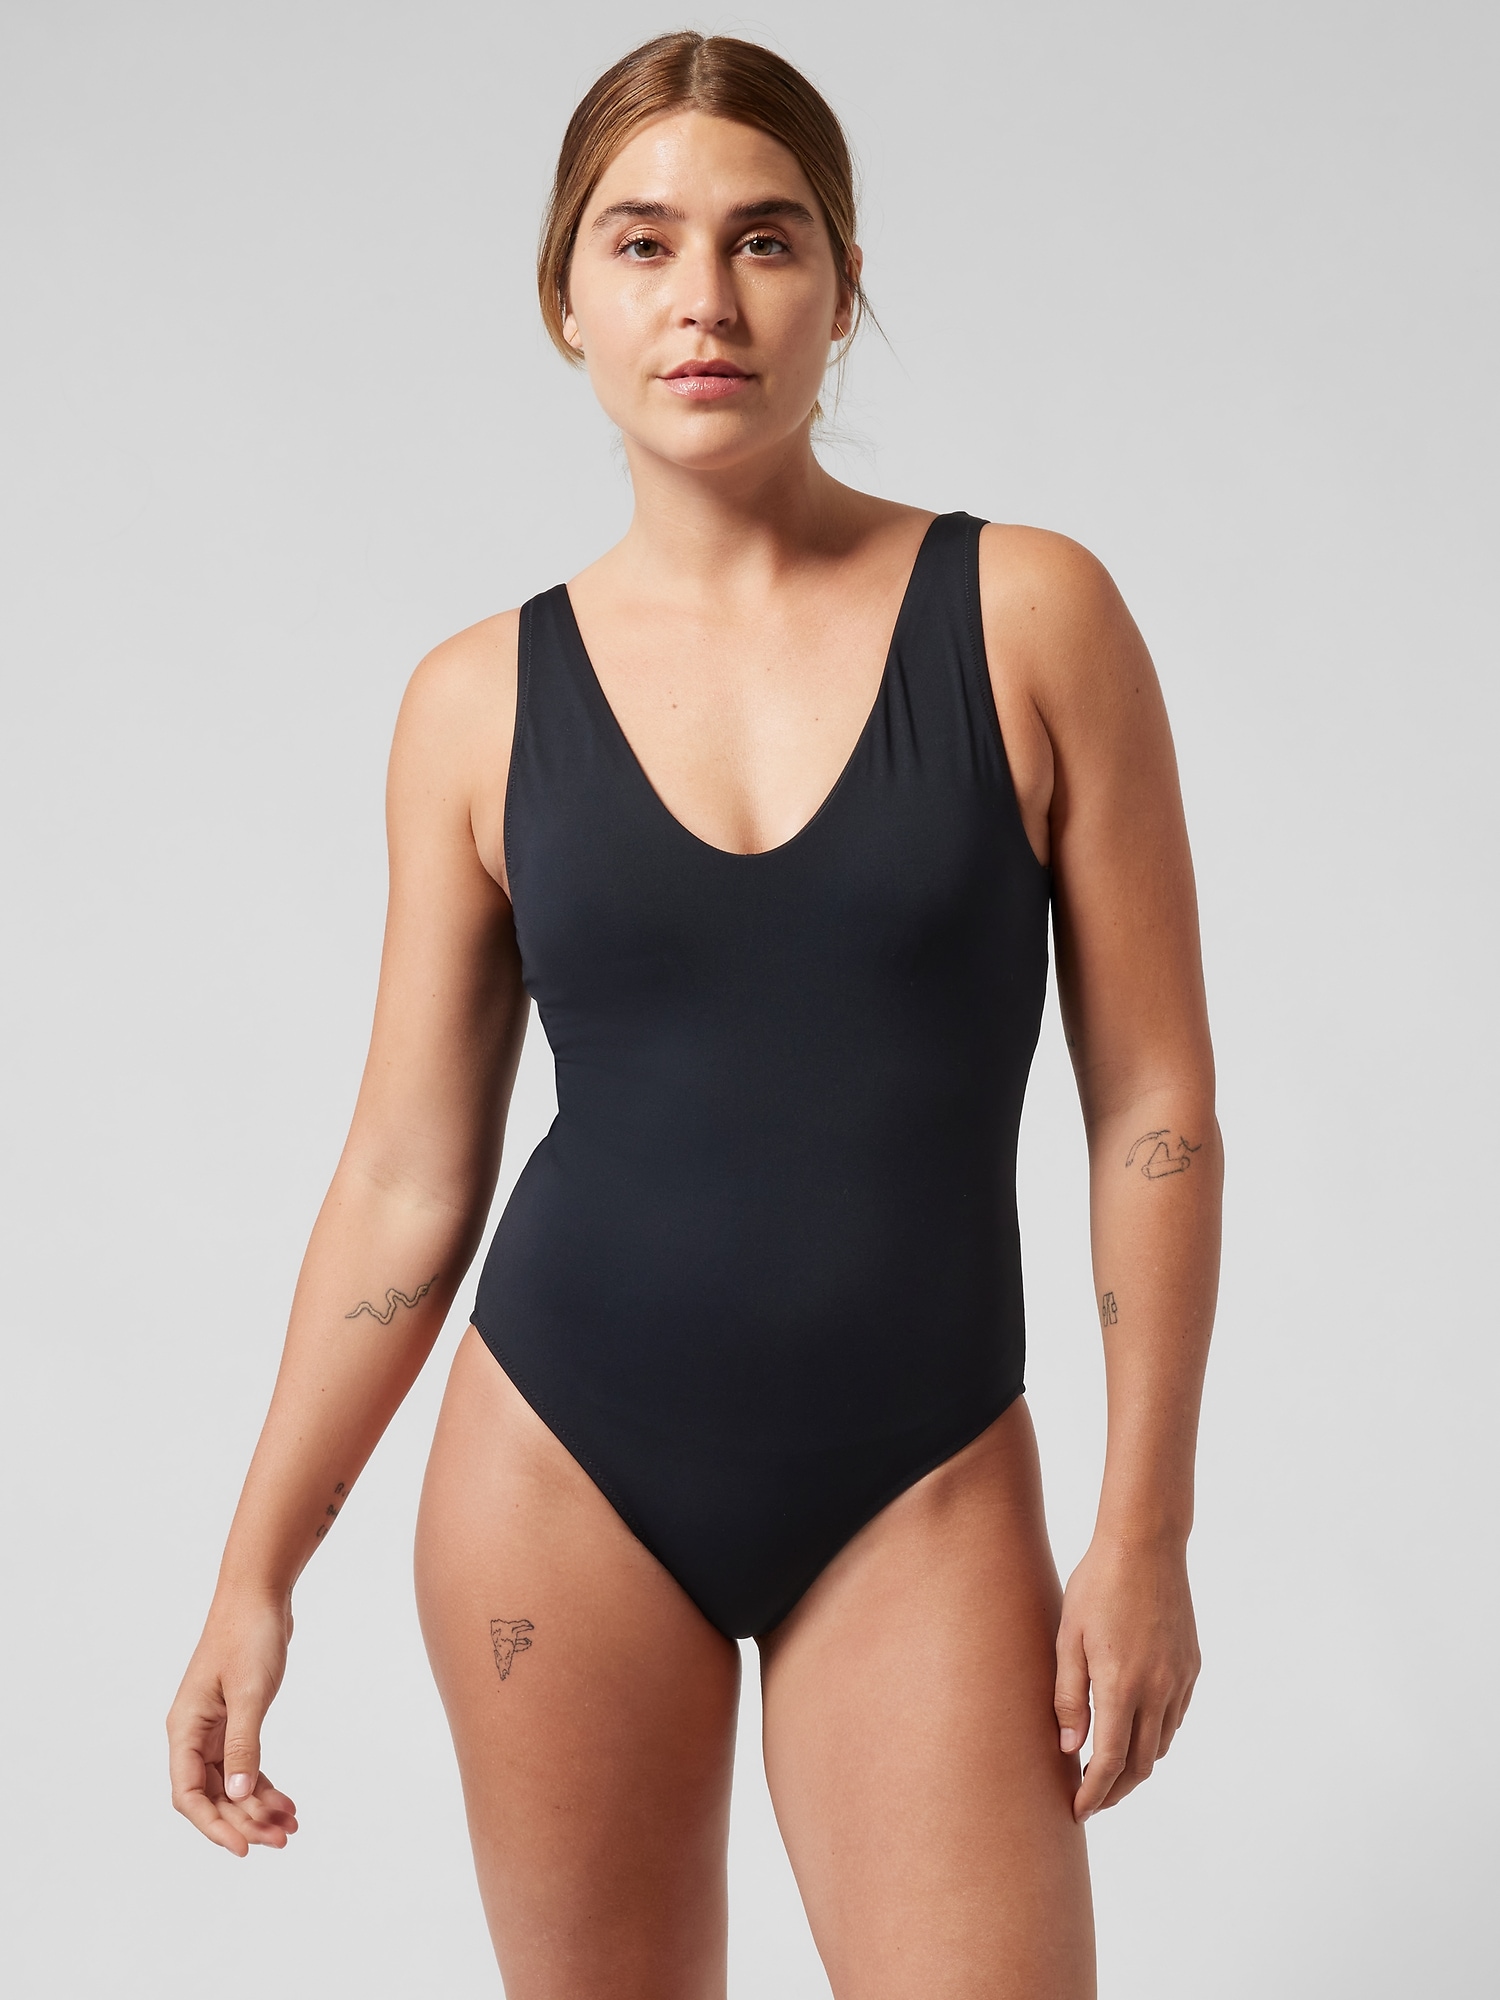 Athleta Women's Seychelles One Piece Swimsuit (Black) $29.97 + Free Shipping on $50+